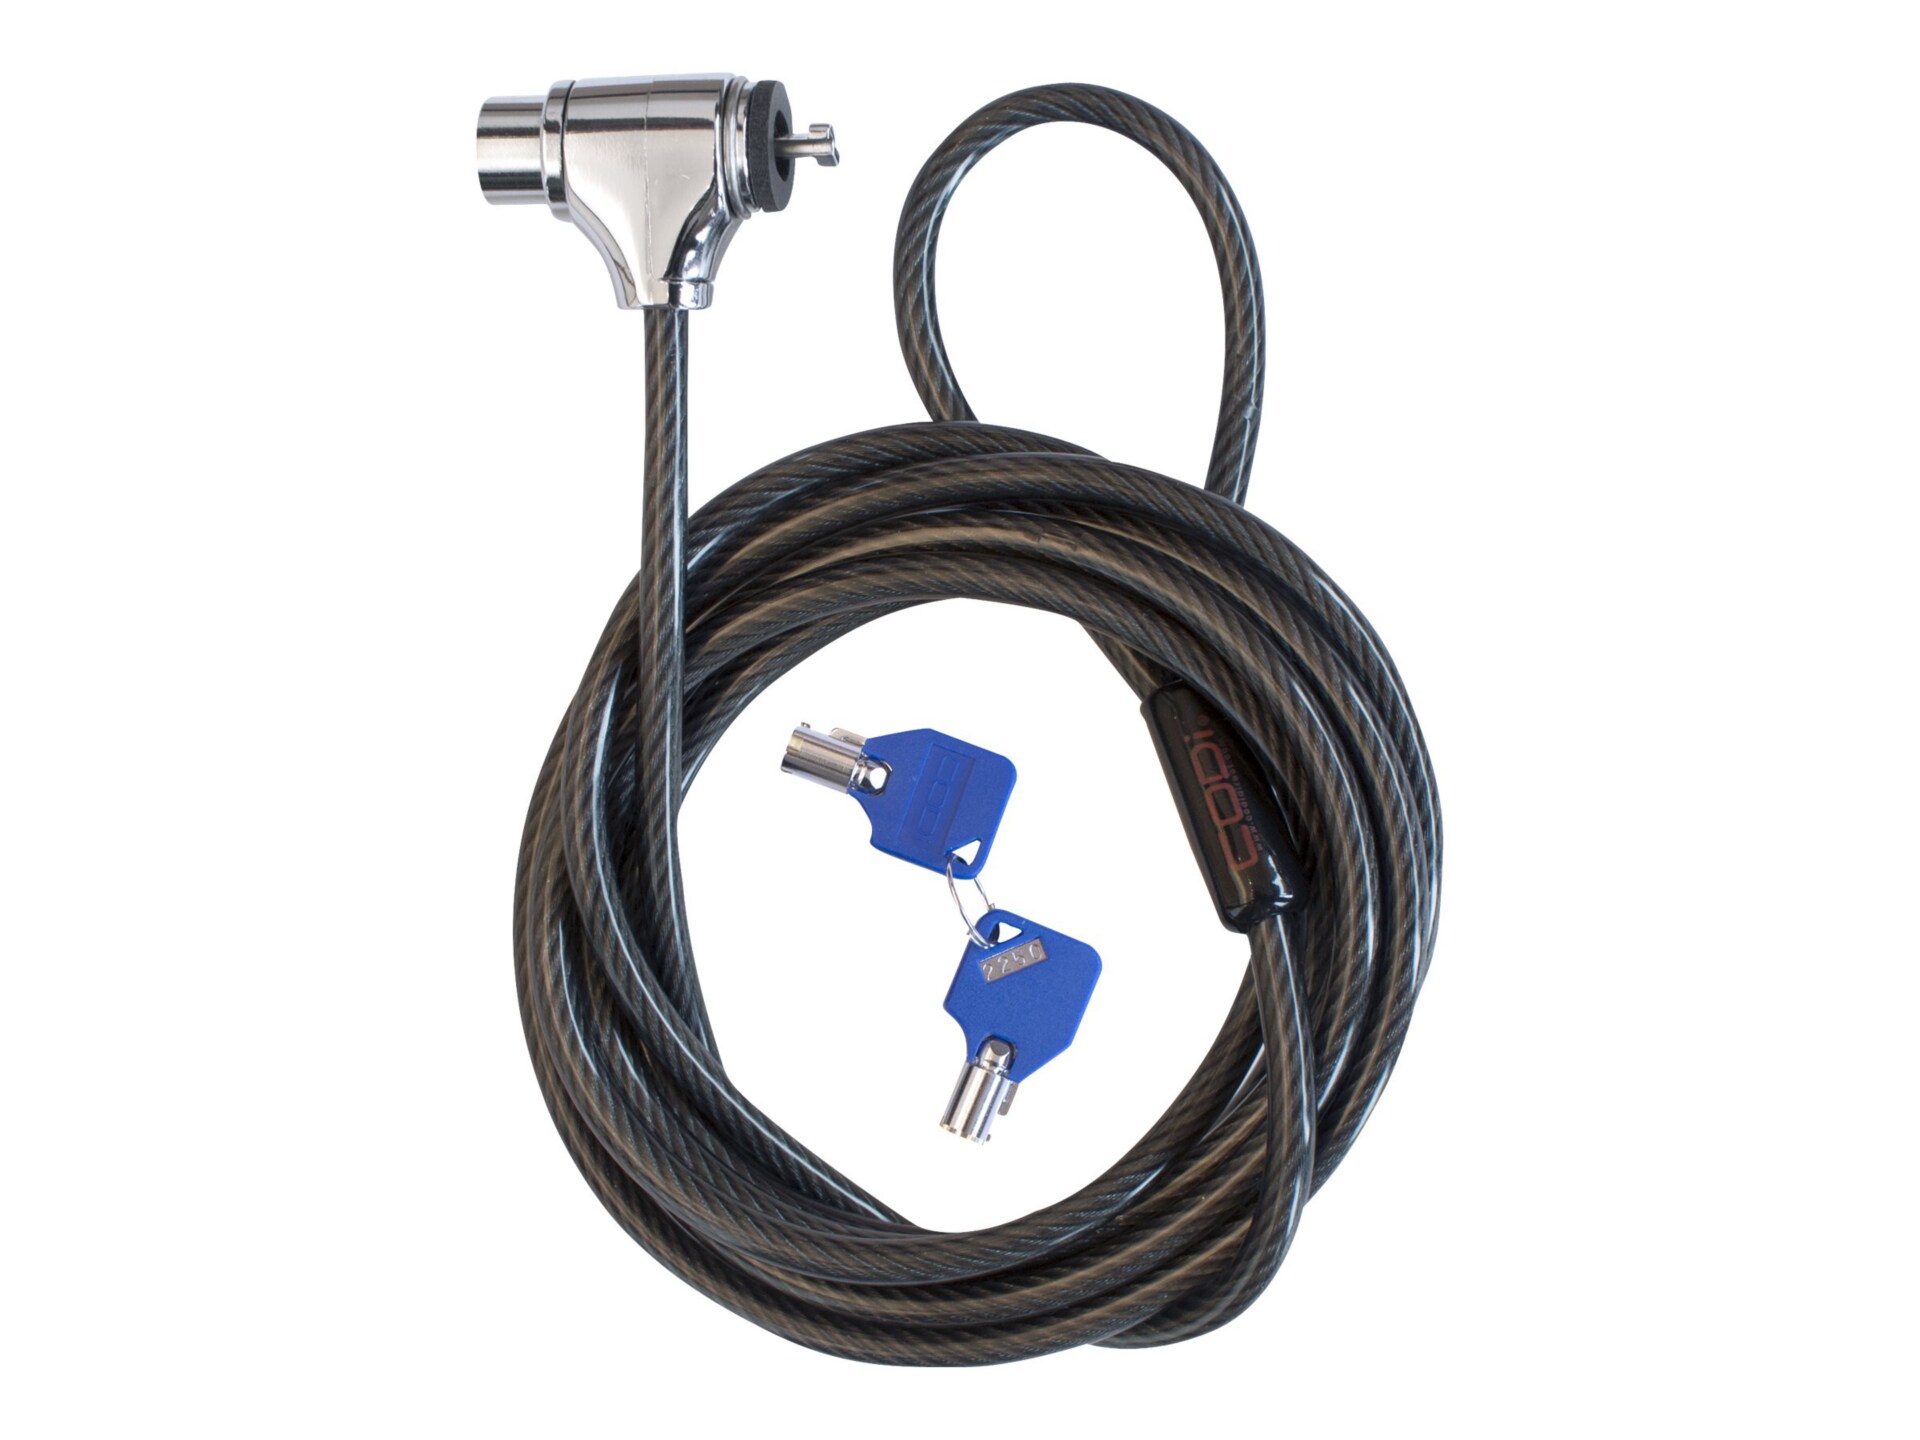 CODi - security cable lock - 9-pin key